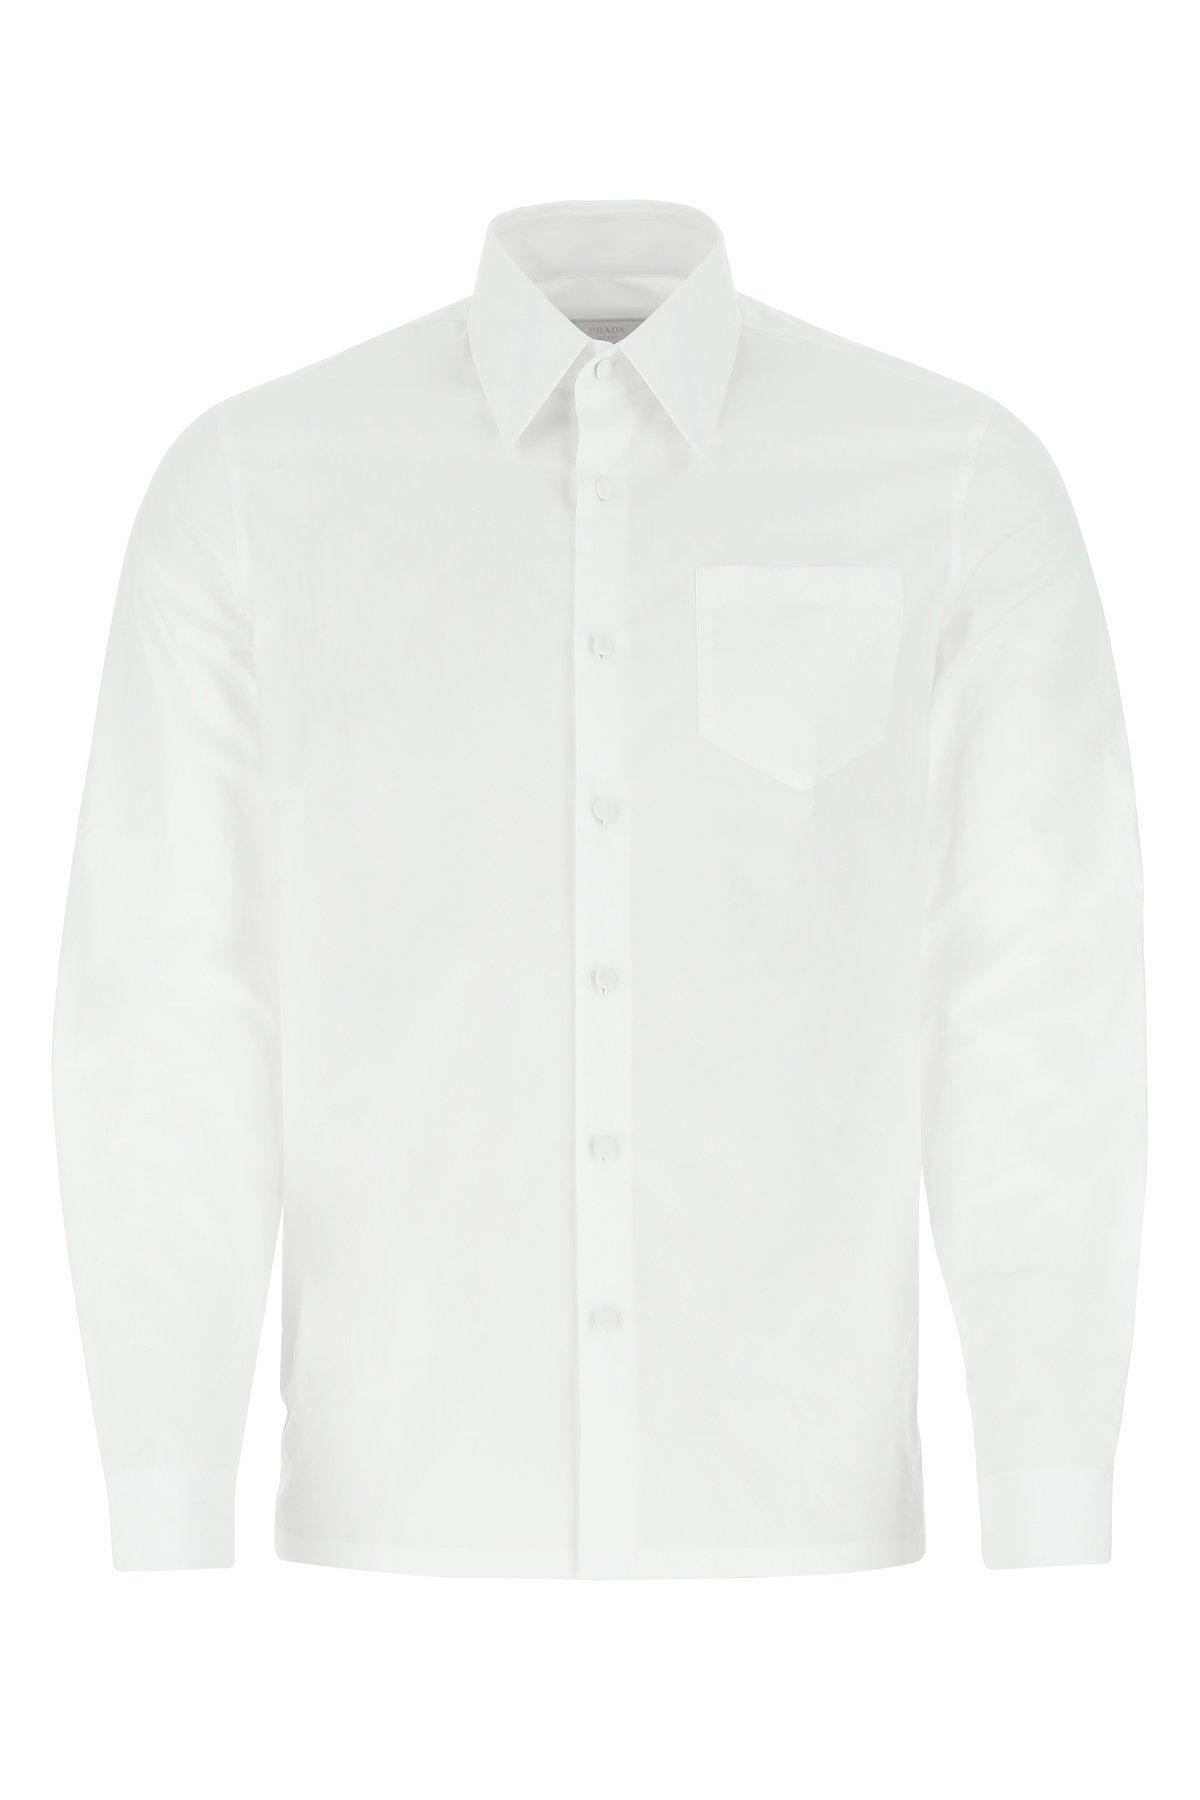 Prada Cotton Button-up Shirt in White for Men - Lyst